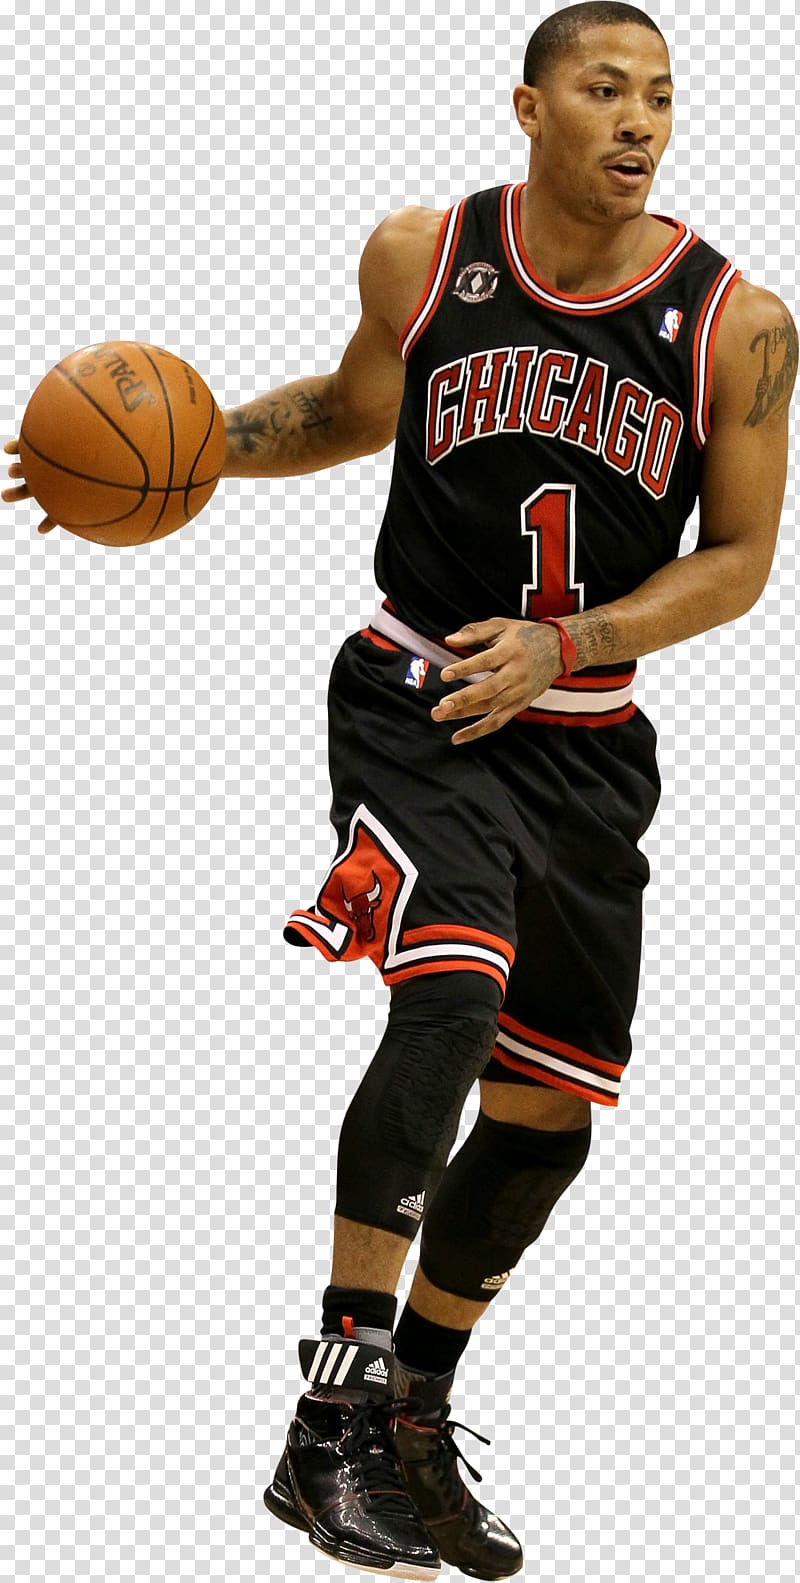 Chicago 1 Derrick Rose, Derrick Rose Chicago Bulls Basketball player NBA, Derrick Rose transparent background PNG clipart